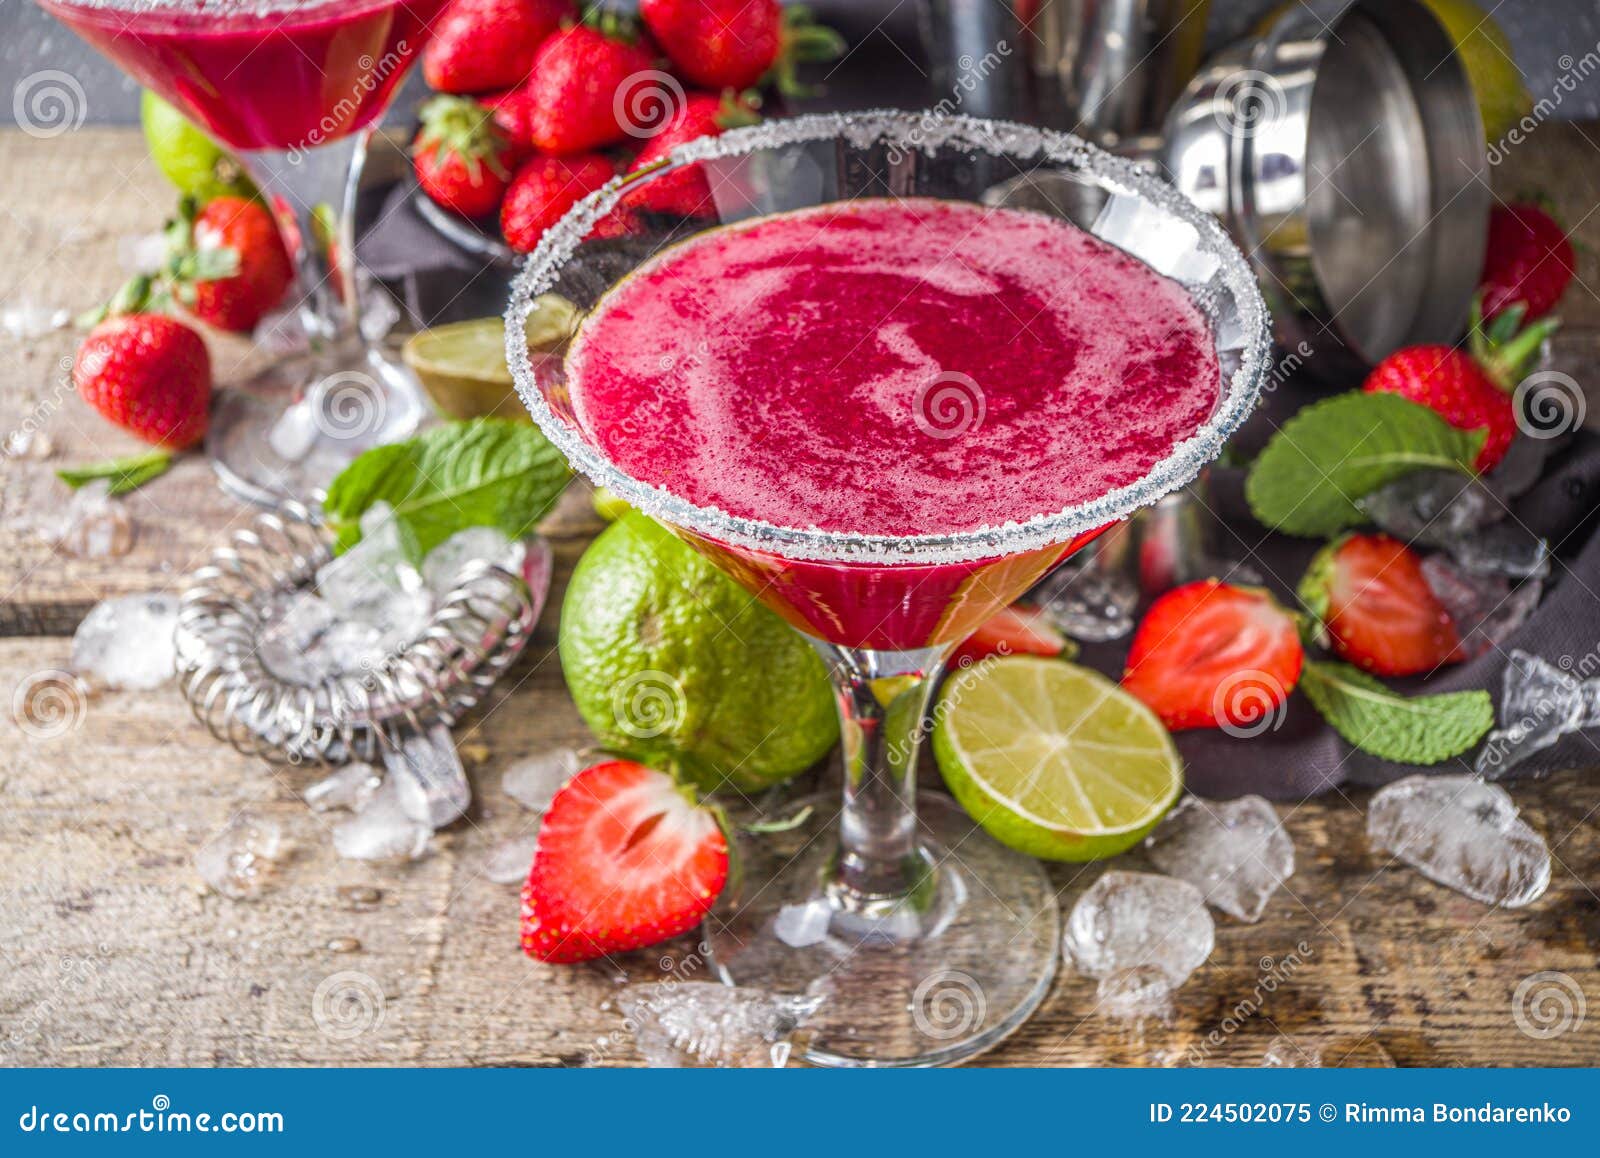 Erdbeer-Margarita-Cocktail stockbild. Bild von stab - 224502075